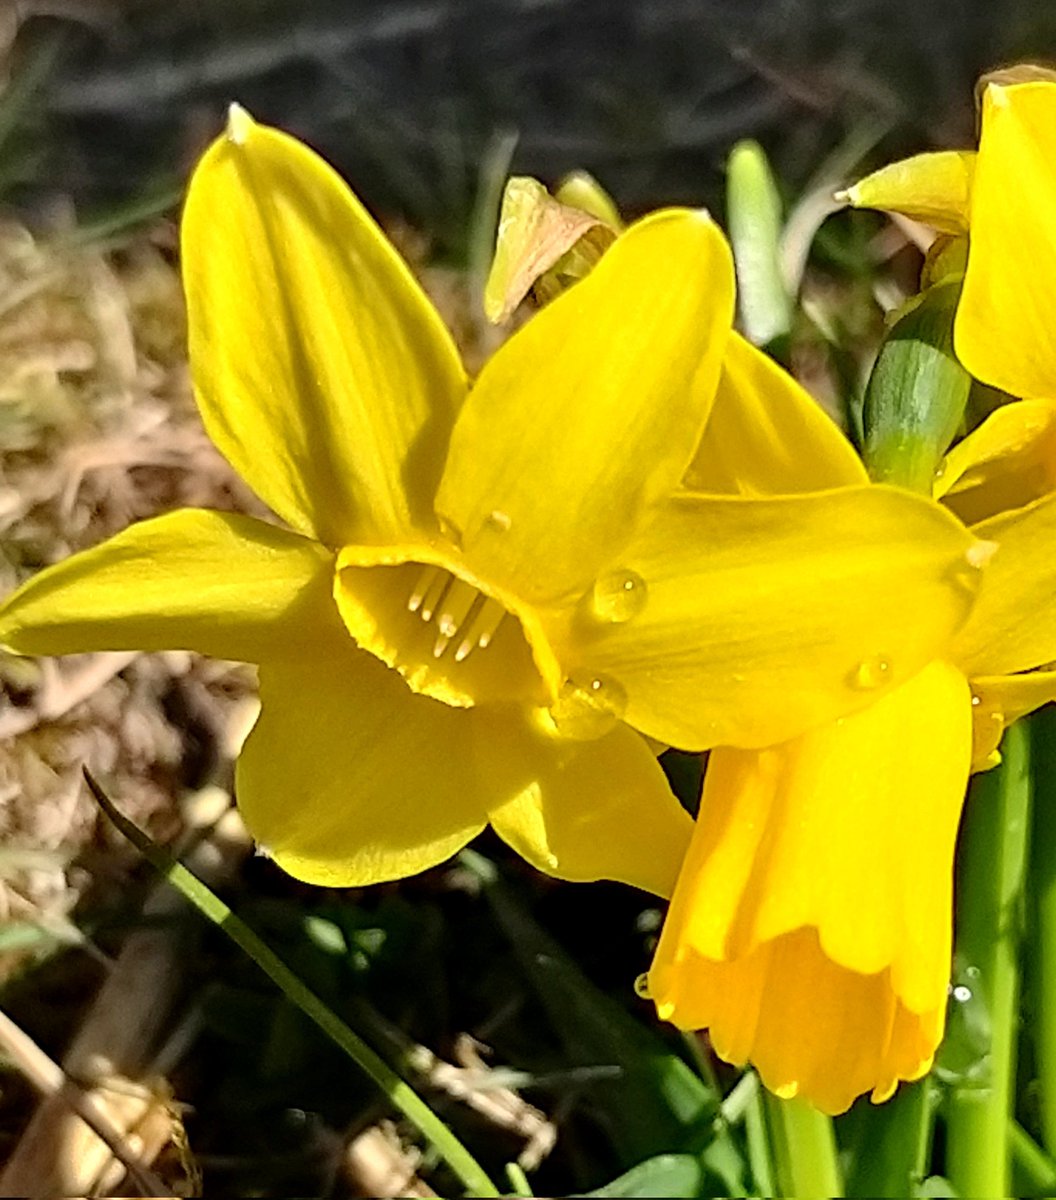 Guten Morgen 🏵☀️💛!
#YellowSunday #Flowers #springblossom #NaturePhotography #goodmorning #wildflowers #nature #macrophotography